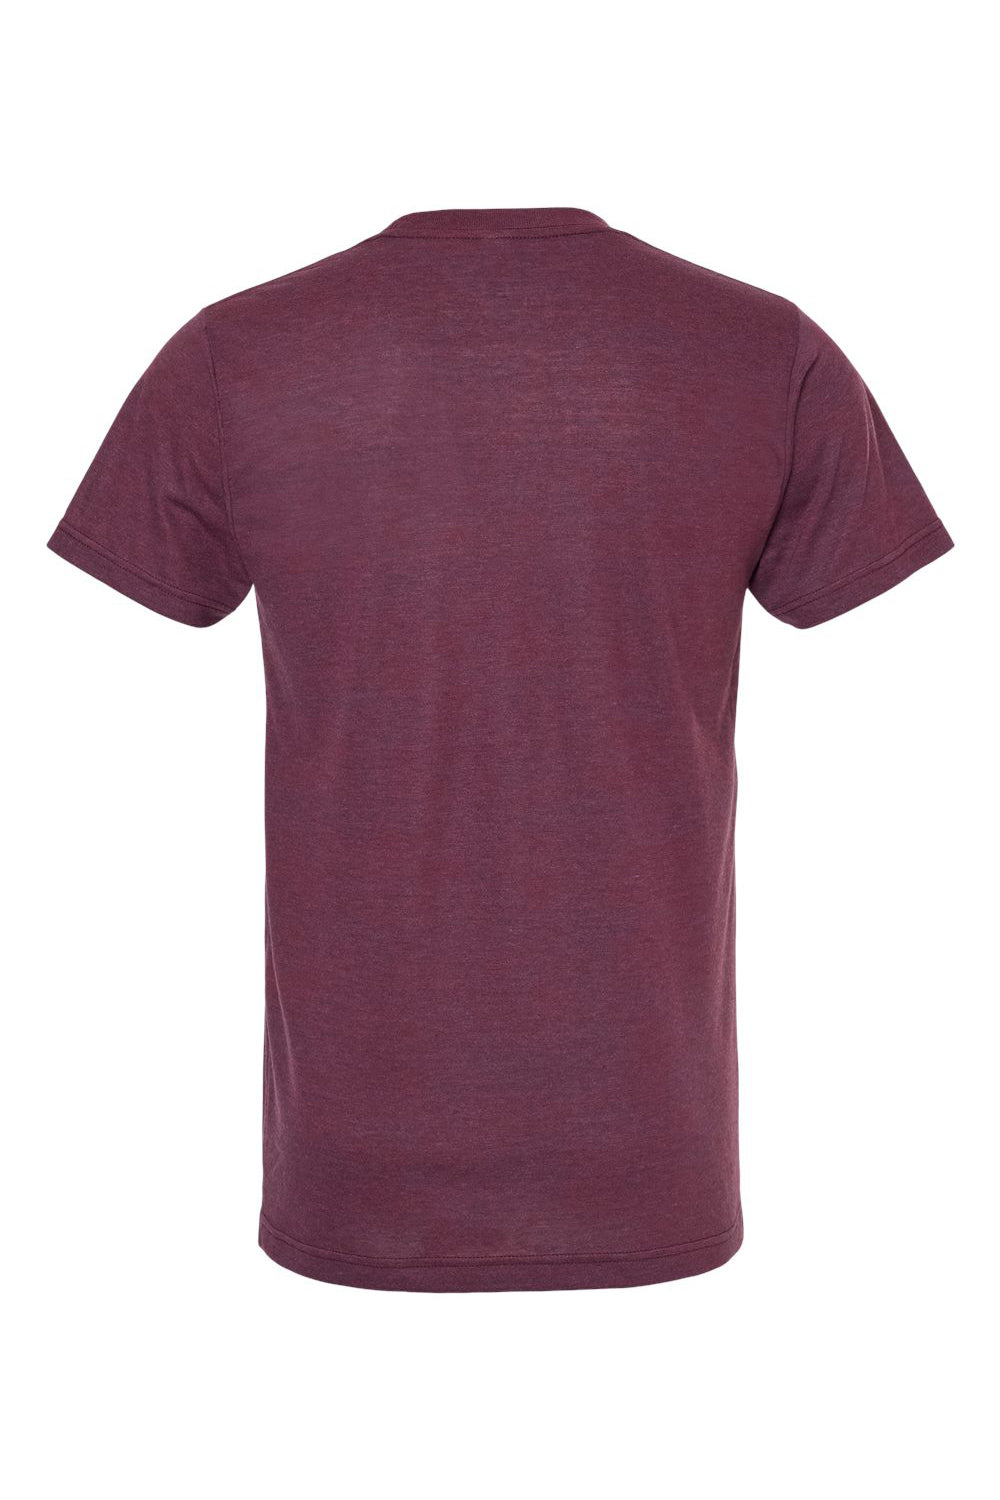 Tultex 254 Mens Short Sleeve Crewneck T-Shirt Berry Purple Flat Back